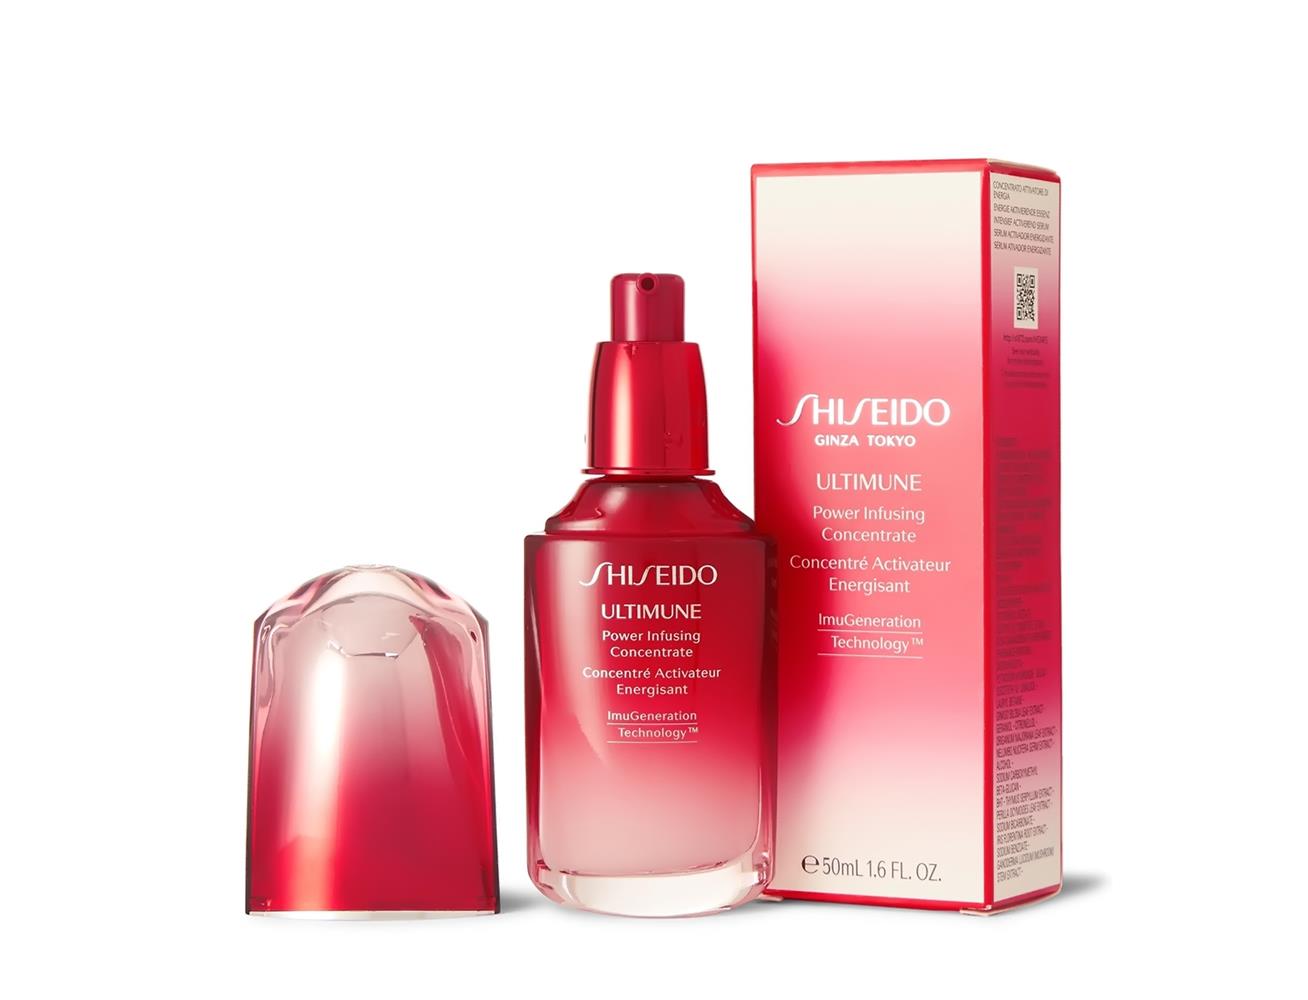 Shiseido для волос. Ultimune концентрат шисейдо Power infusing. Концентрат Shiseido Ultimune Power infusing Concentrate. Сыворотка шисейдо. Шисейдо для волос.